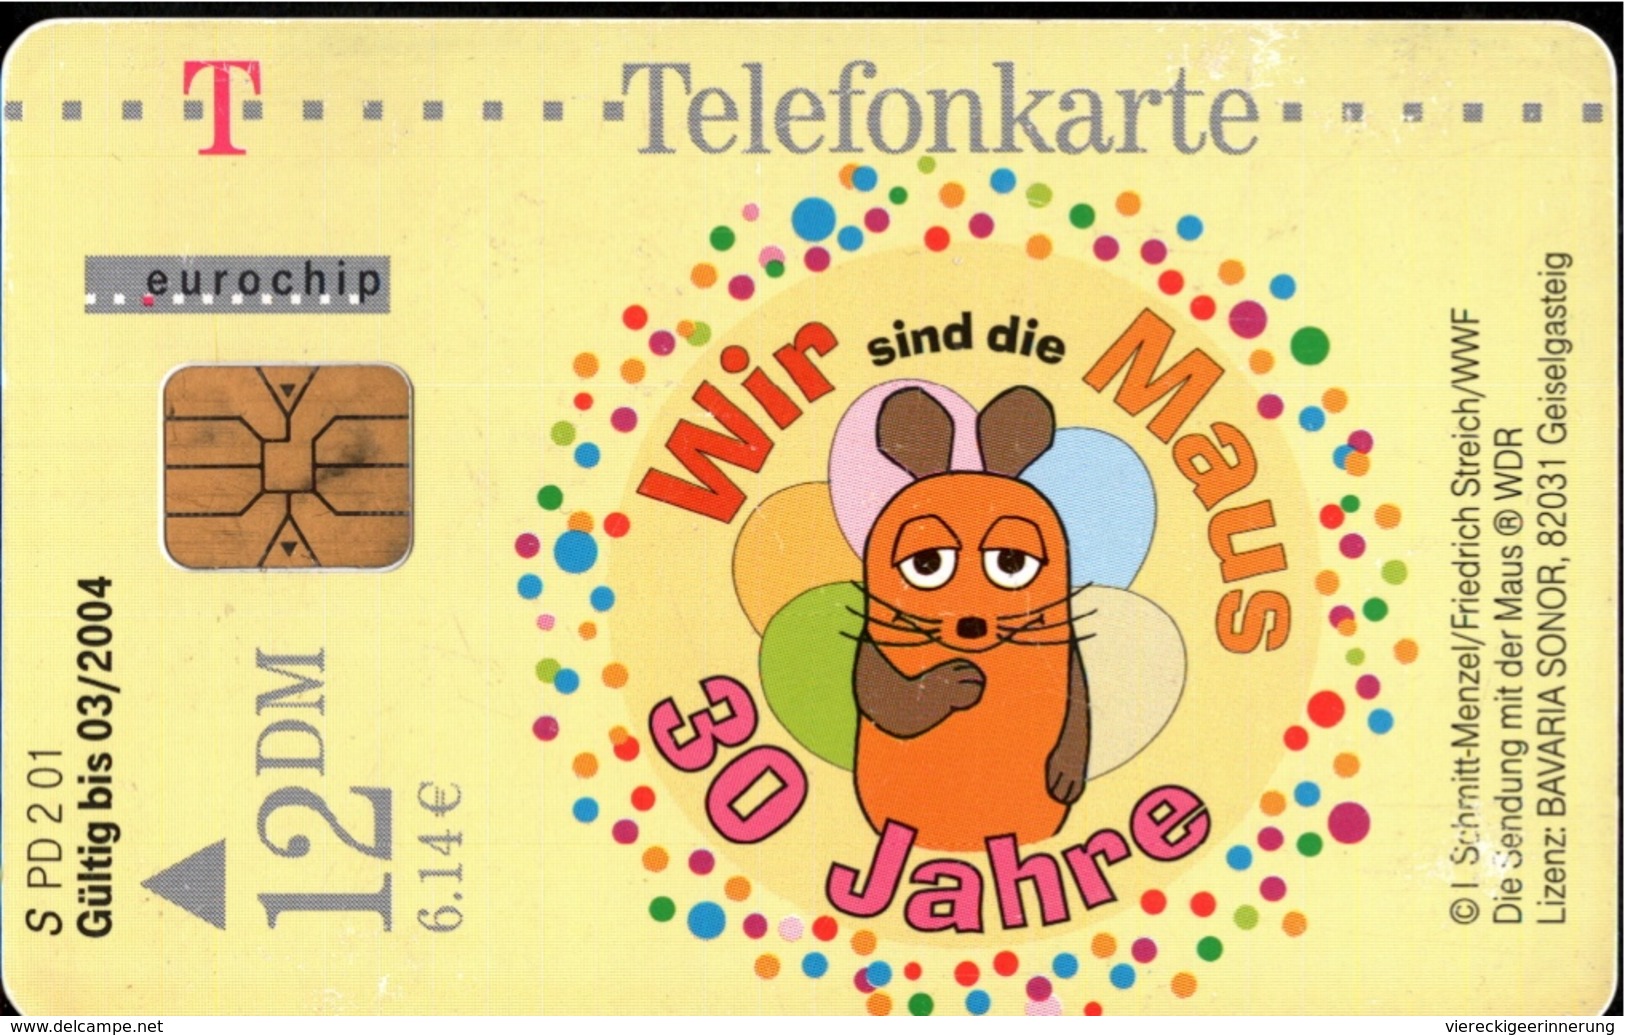 ! Telefonkarte, Telecarte, Phonecard, 2001, S PD2, Sendung Mit Der Maus, Germany - P & PD-Series: Schalterkarten Der Dt. Telekom